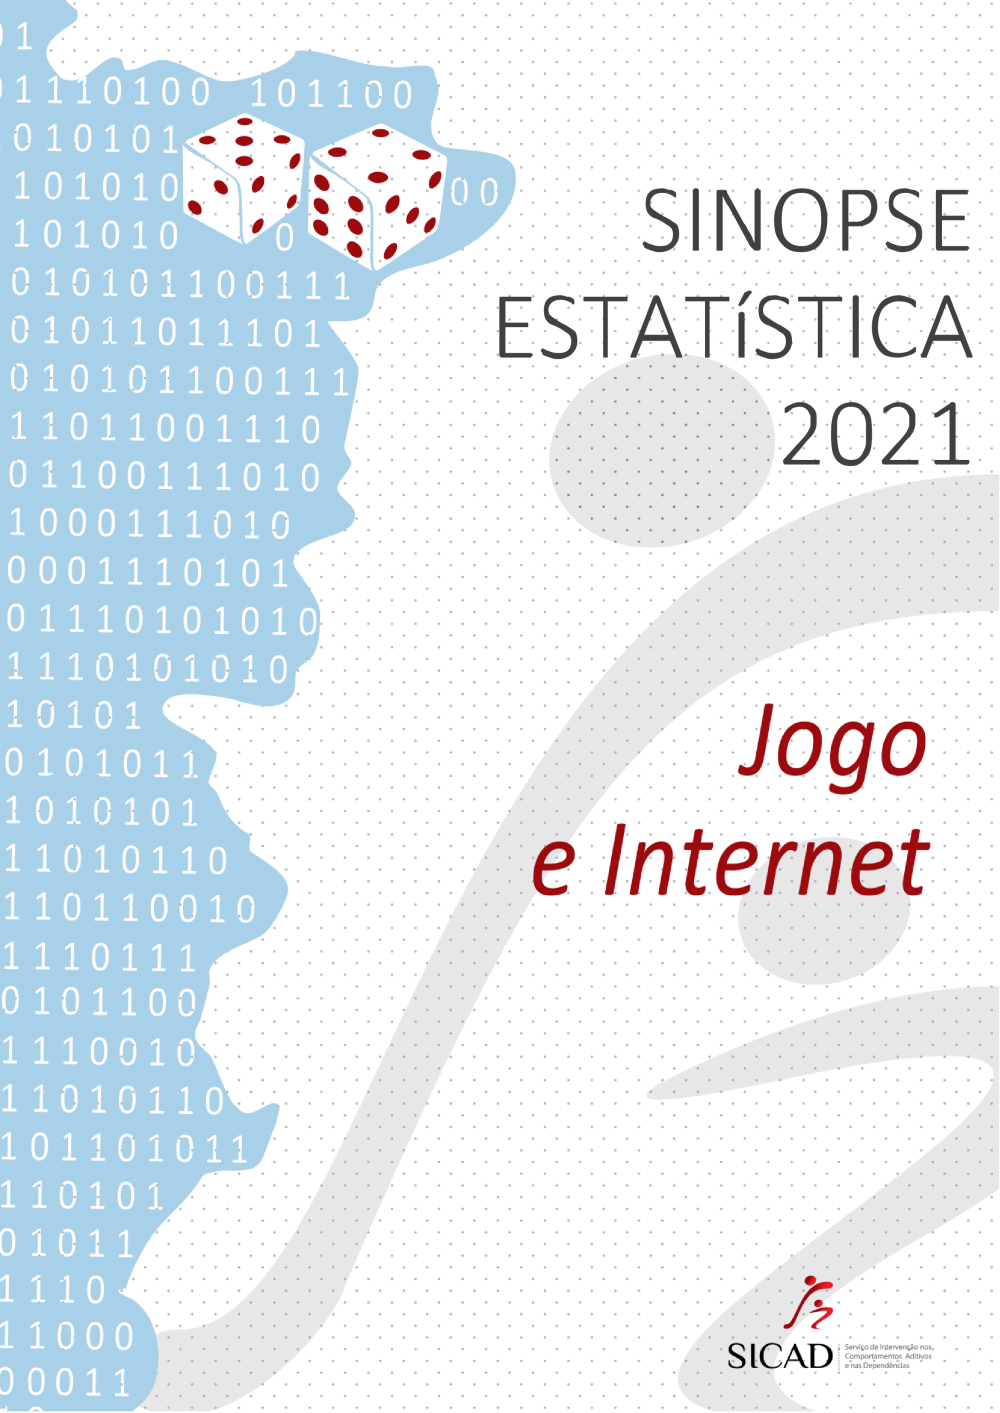 Sinopse Estatistica 2021 - Jogo Internet